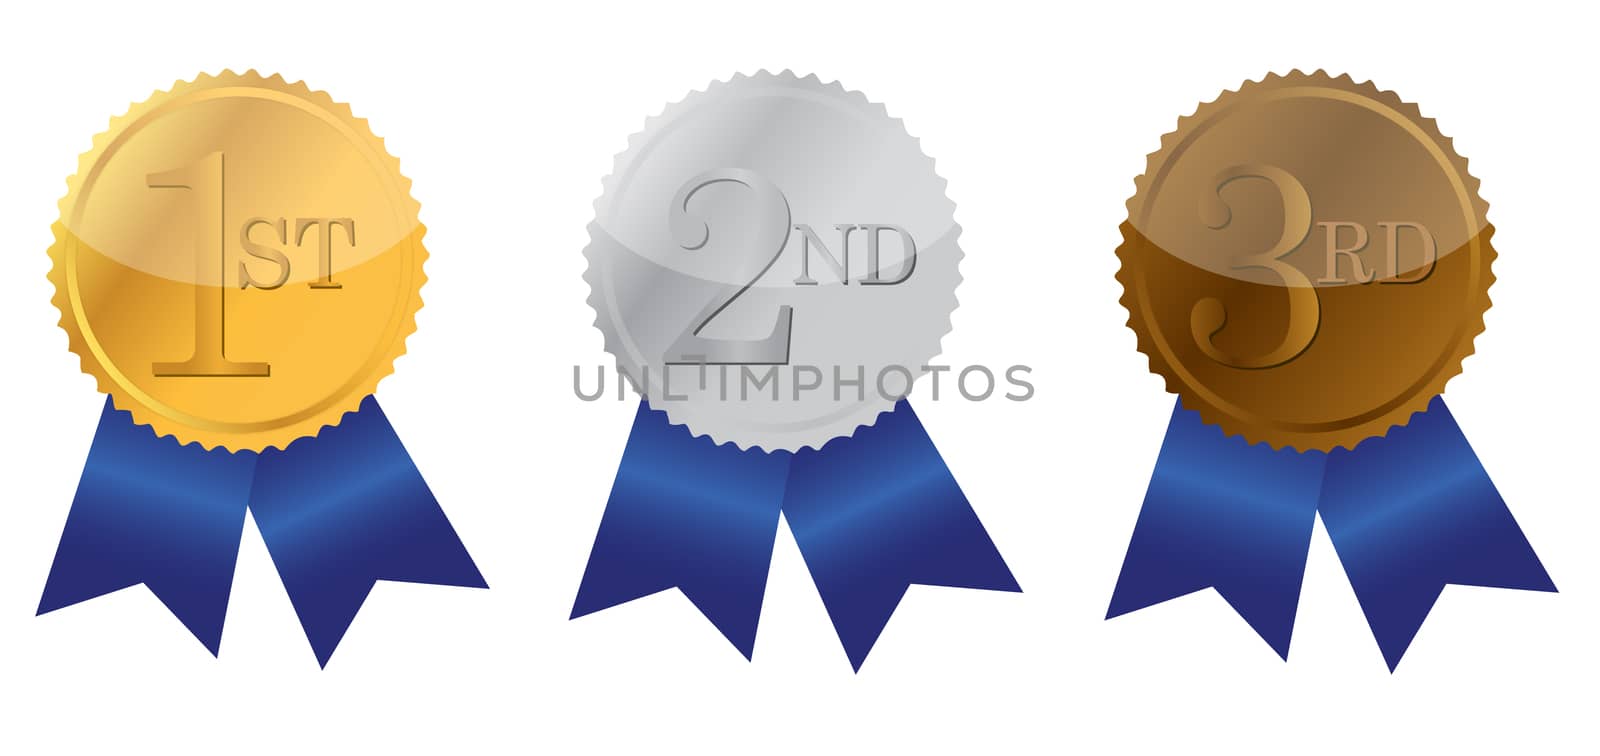 Three ribbon of Achievement, gold, silver and bronze illustration design